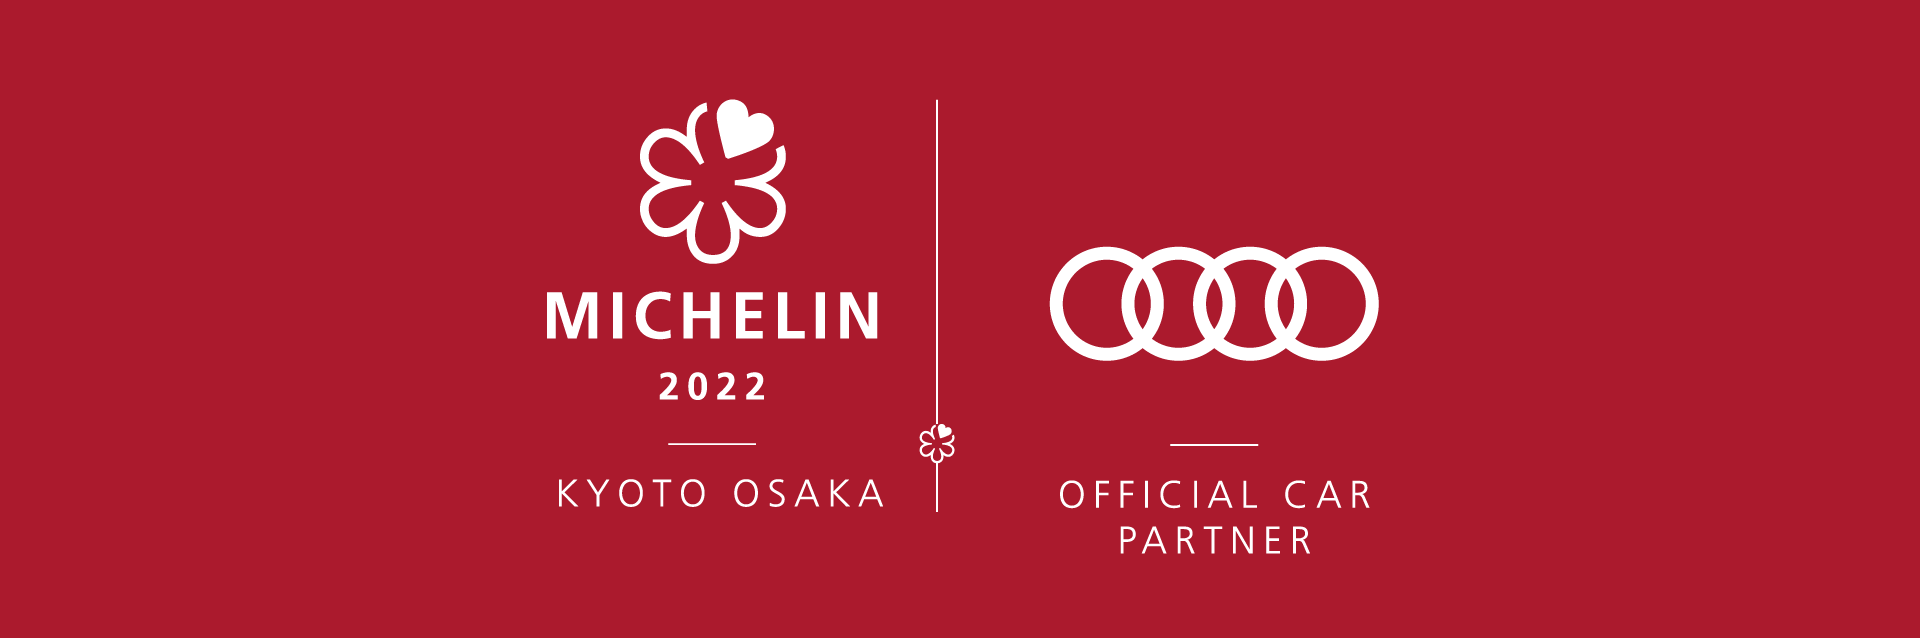 MICHELIN 2022 KYOTO OSAKA & OKYO OFIFICIAL PARTNER Audi logo